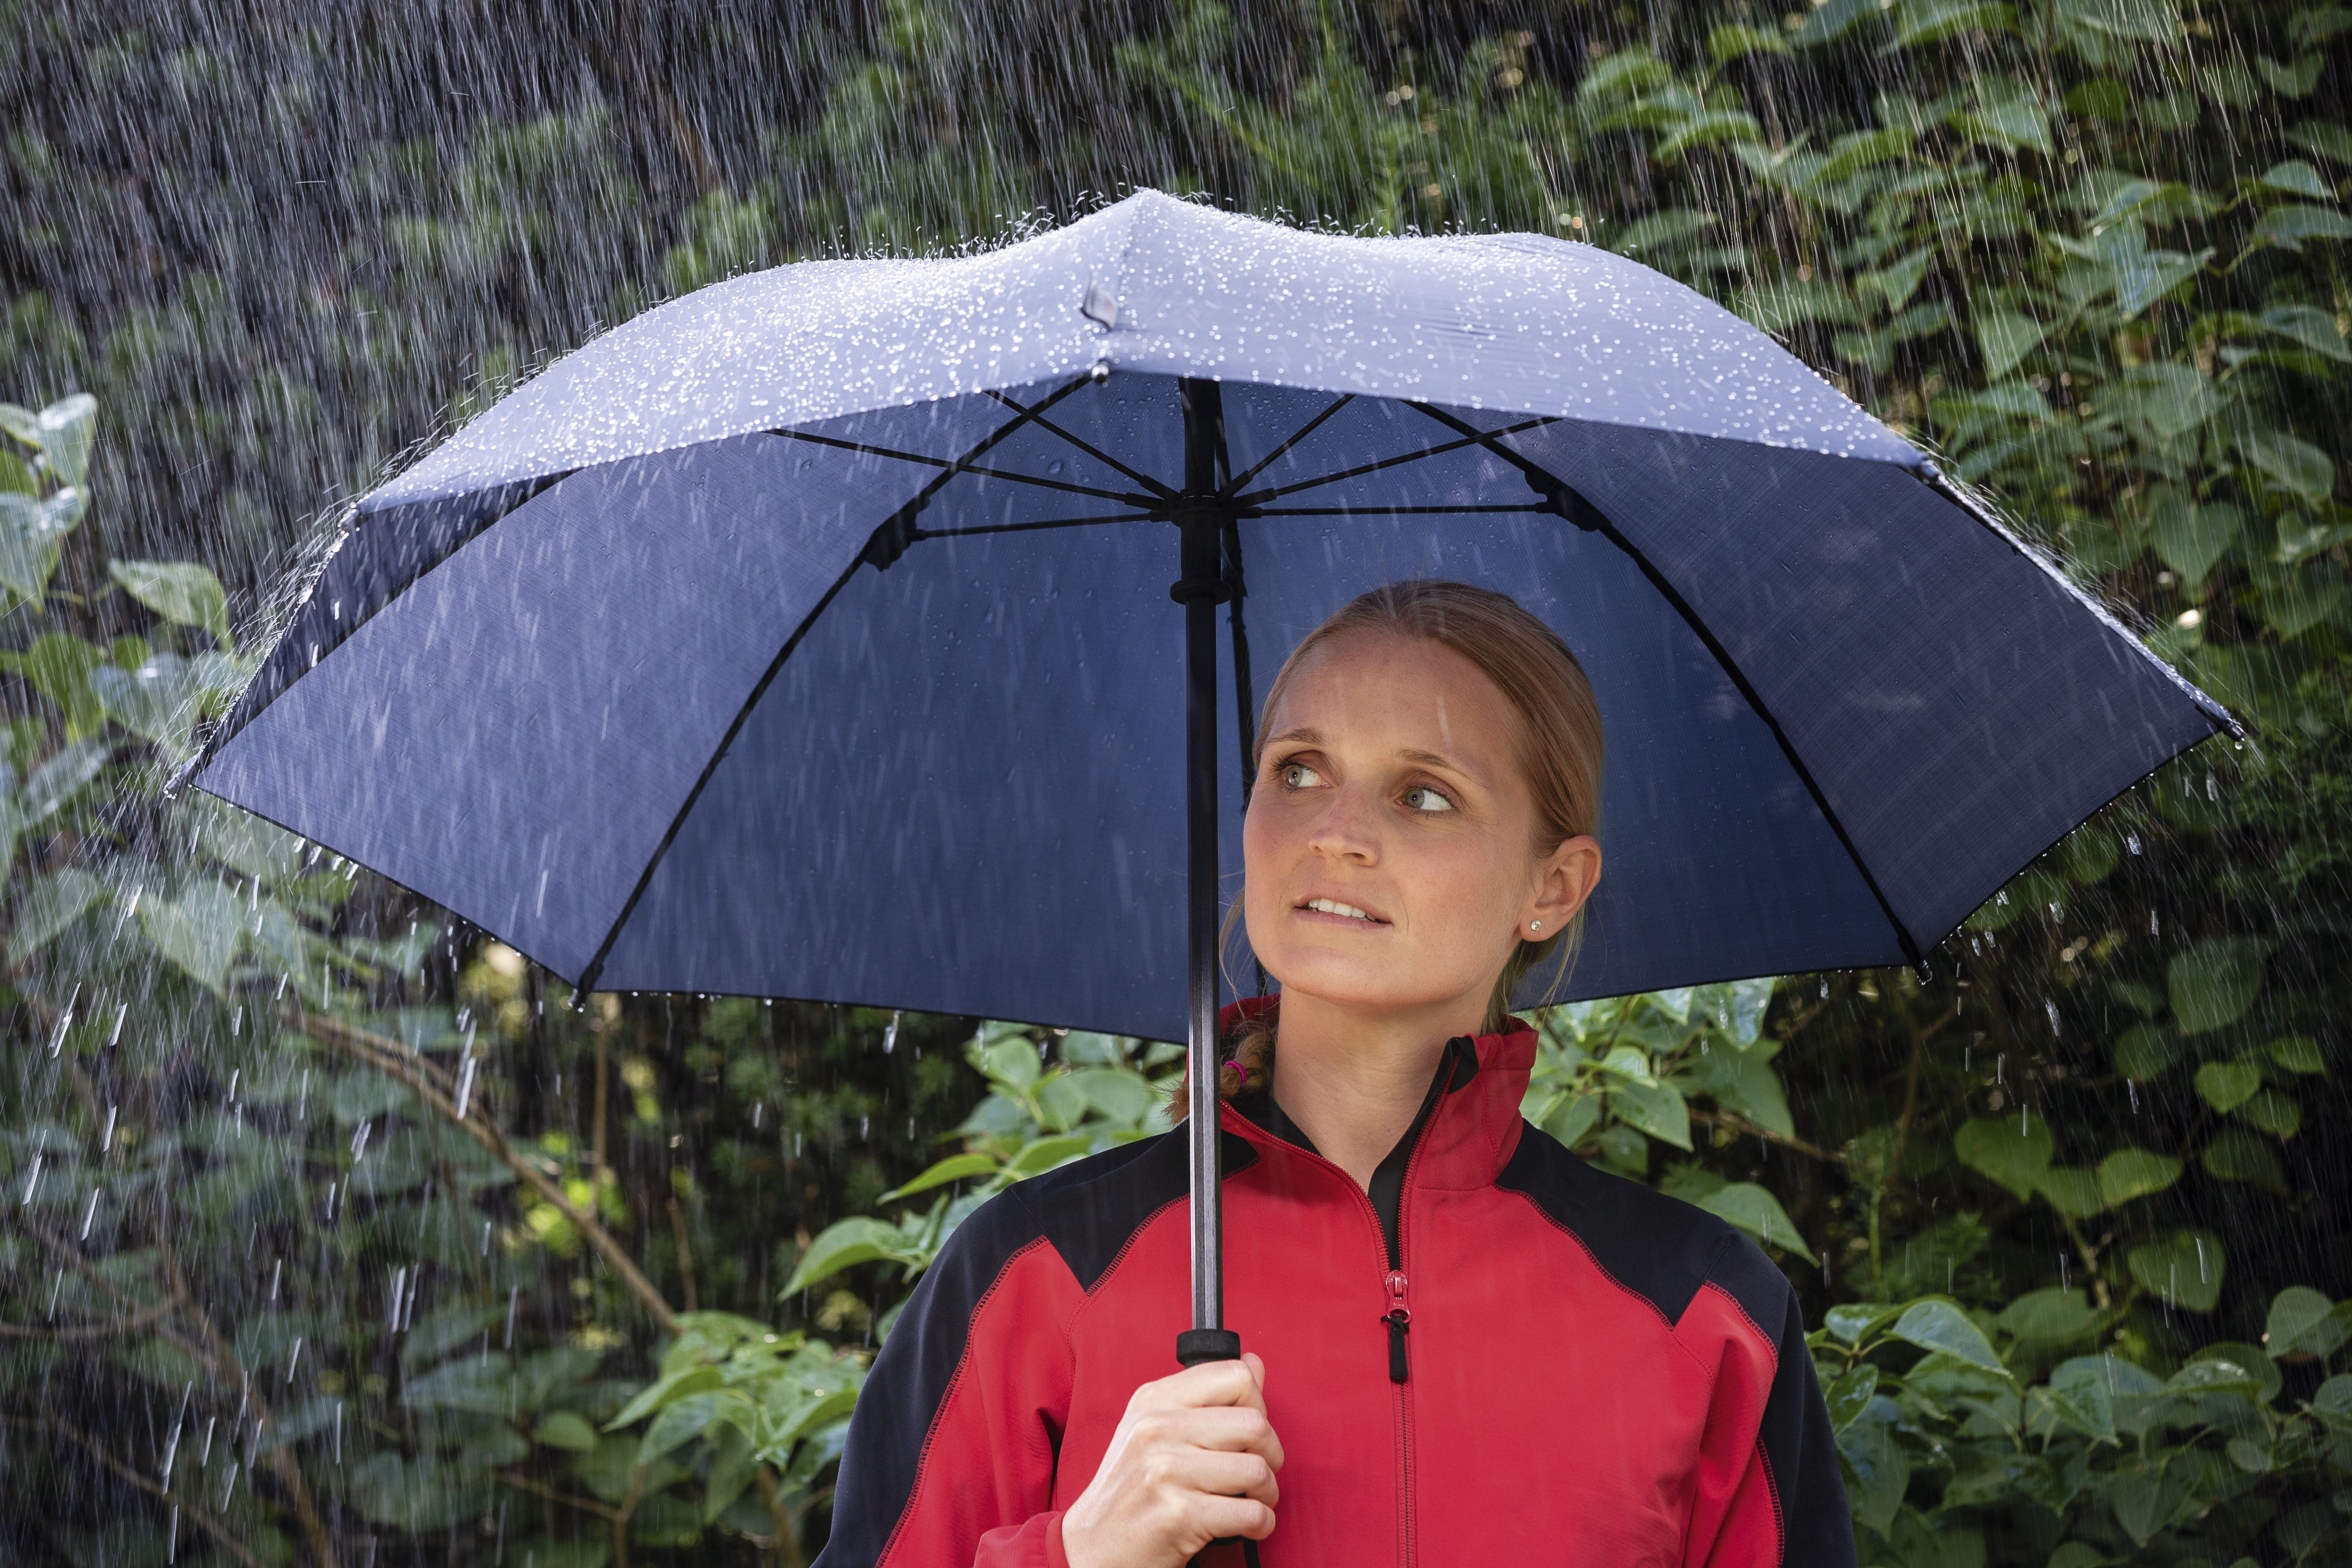 | Trekking-Stockschirm Zubehör Marine Euroschirm Regenschirm | - Rucksäcke echte Regenschutz Swing handsfree - Outdoor erste | - Der | handfreie